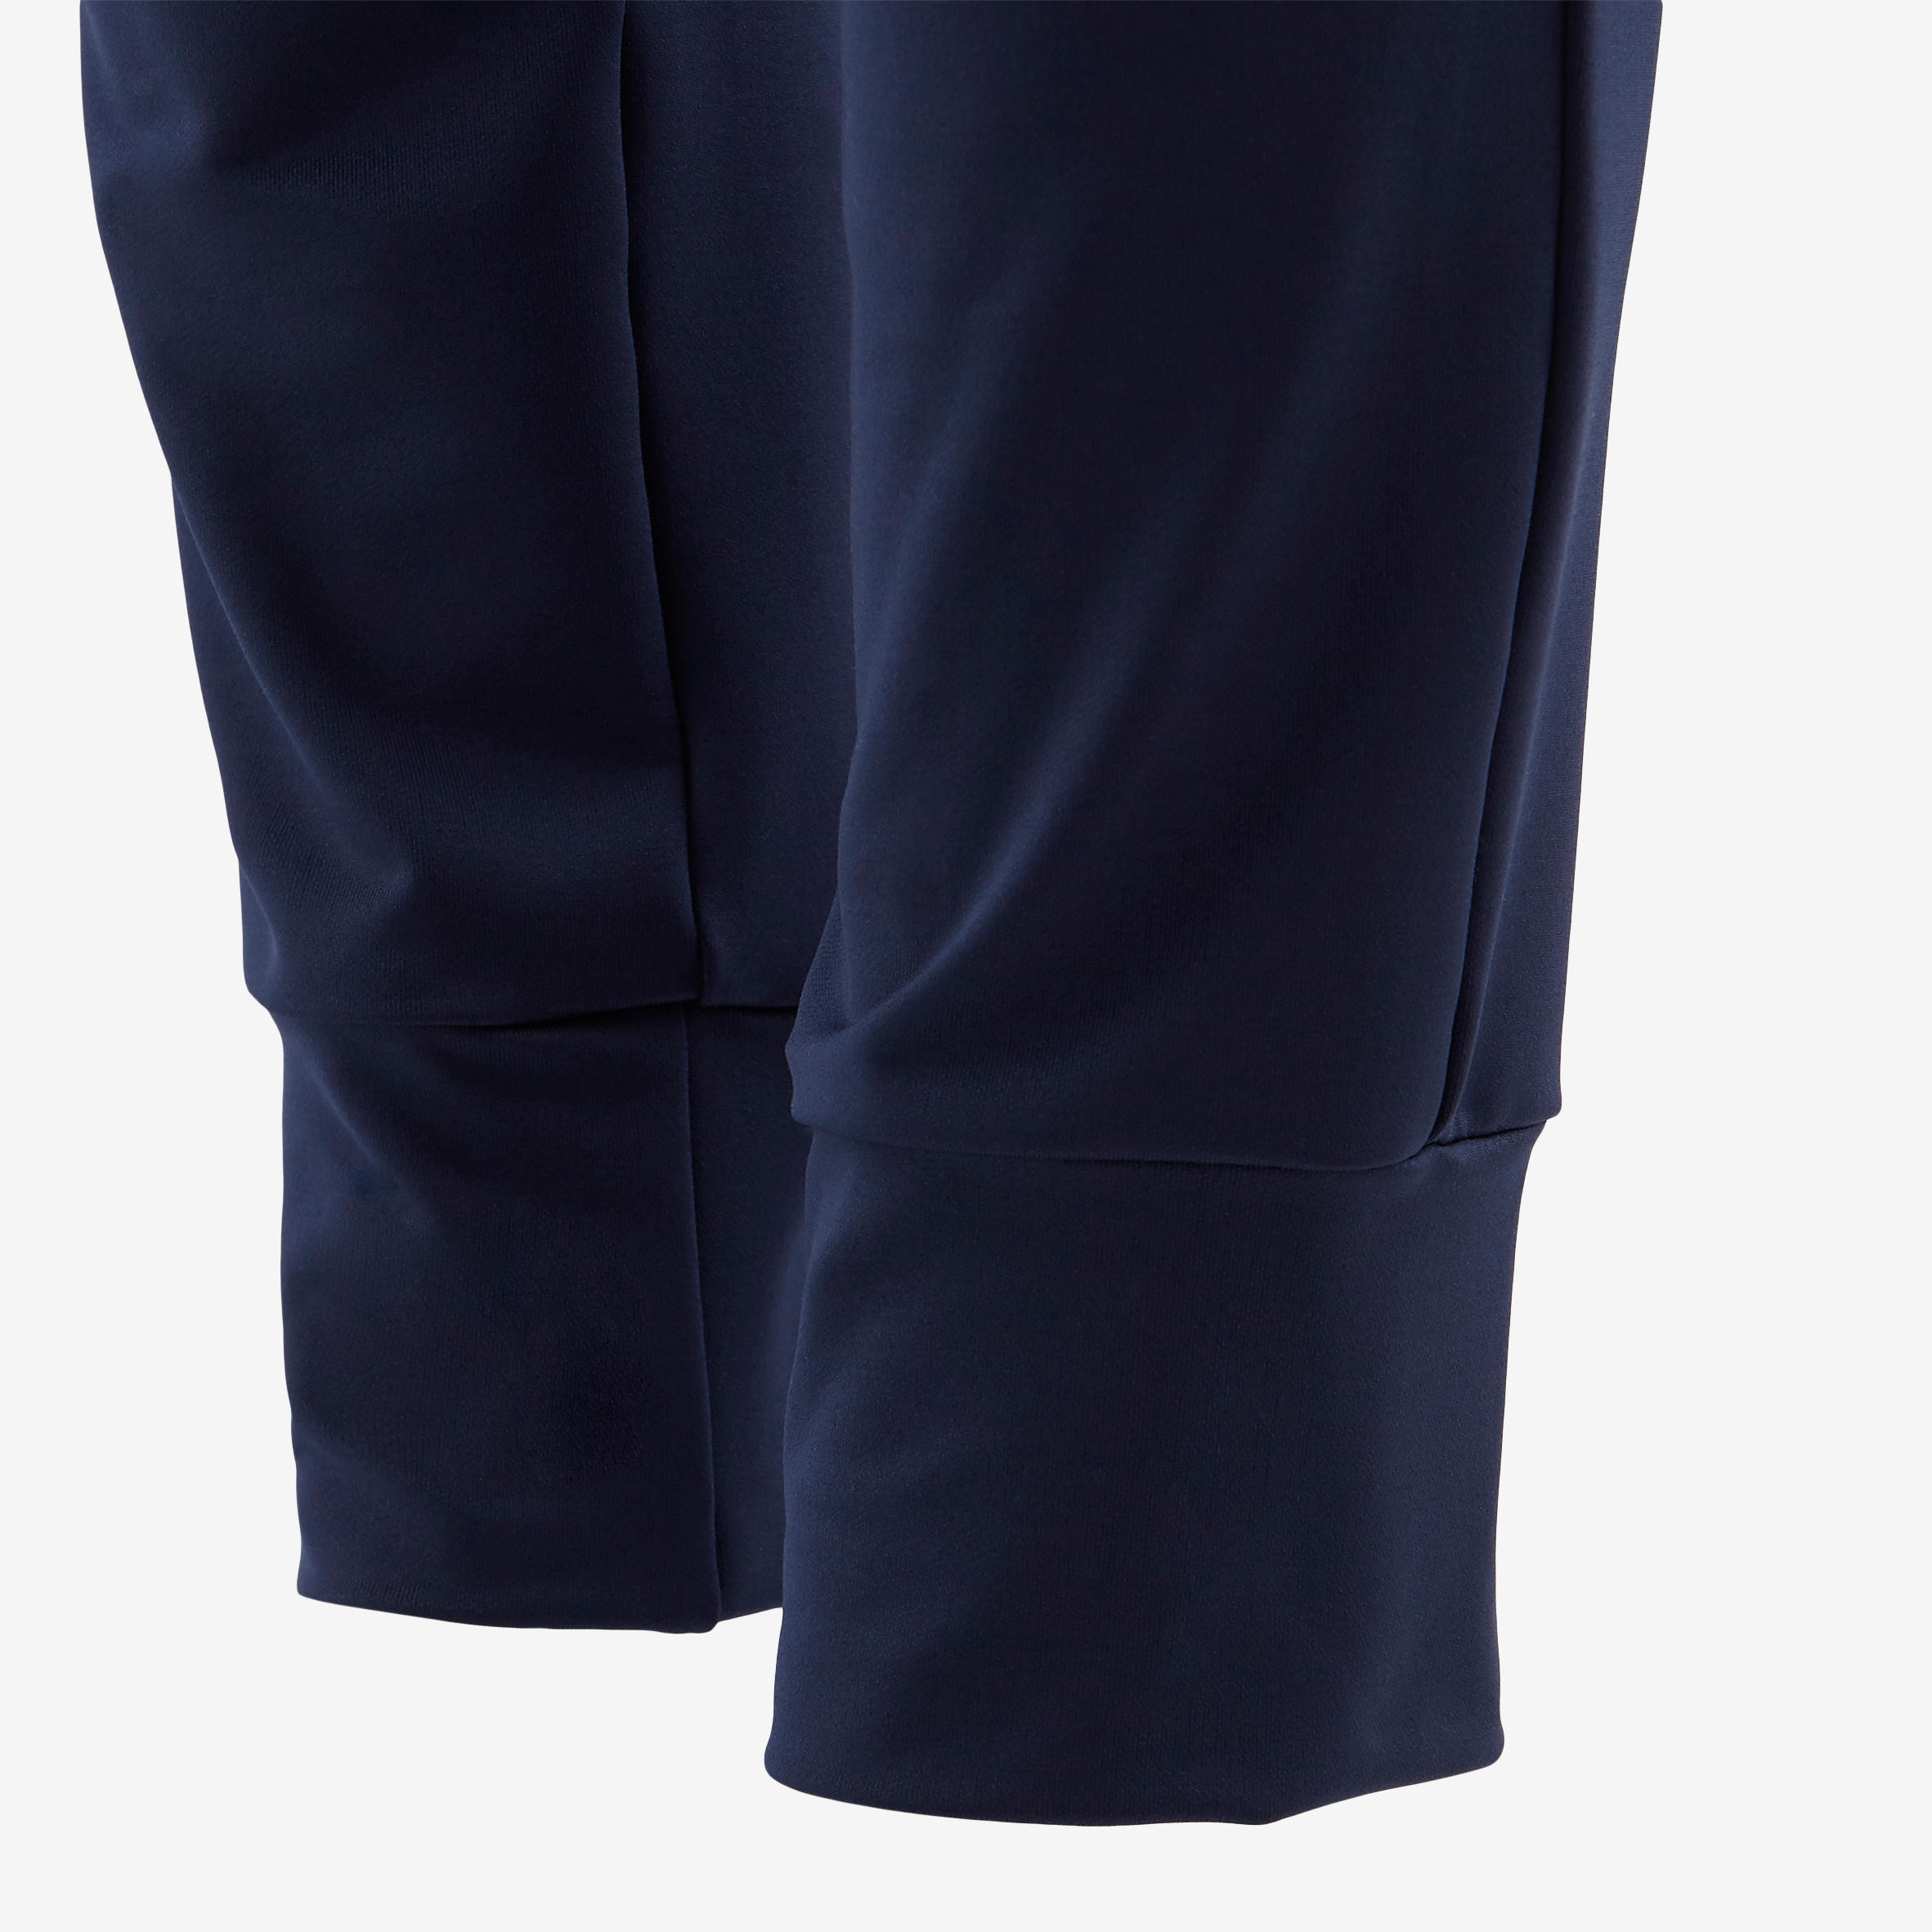 Pantalon large synthétique respirant,résistant léger S500 garçon GYM ENFANT navy